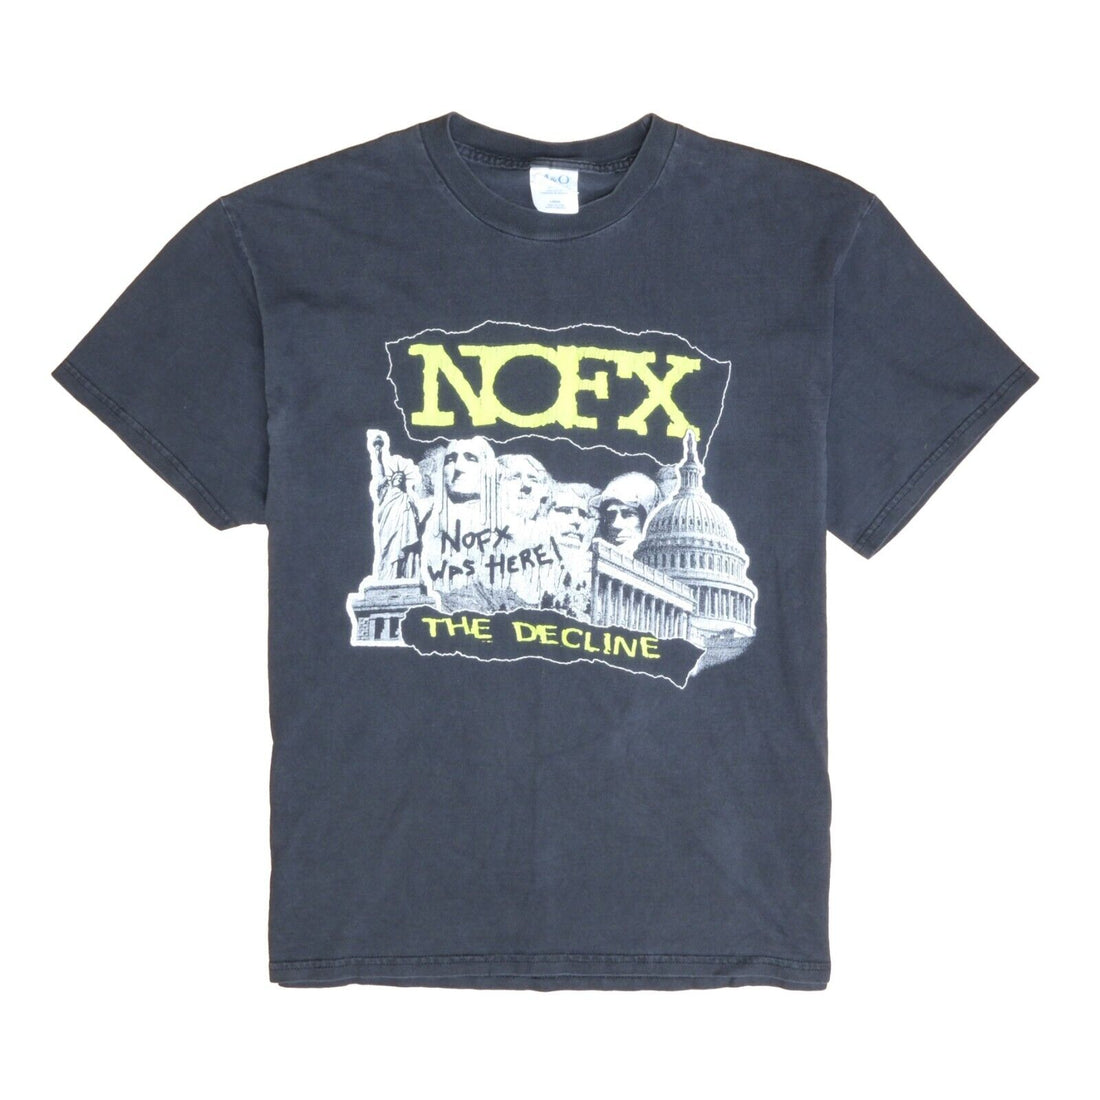 Vintage NOFX The Decline T-Shirt Large Punk Band Tee 2000